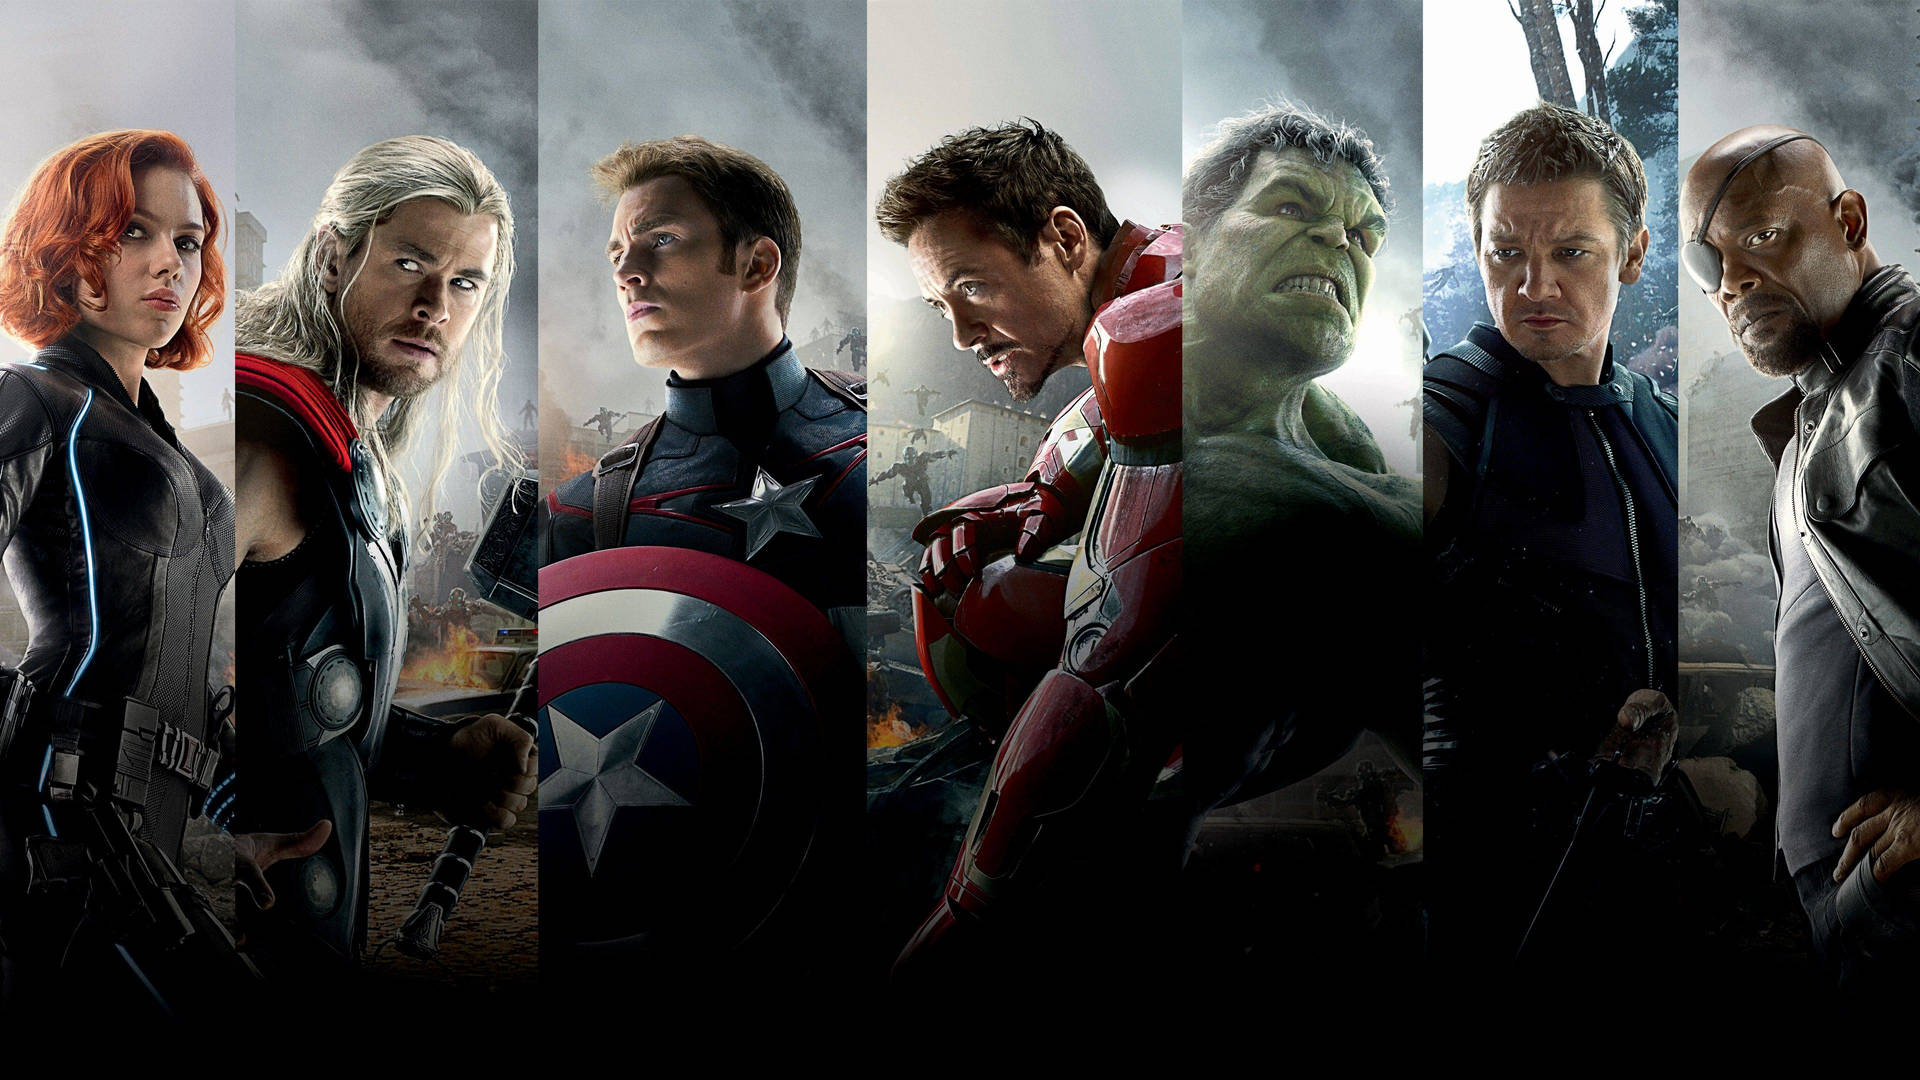 Avengers superheroes characters, Thor, Black Widow, Hulk, Captain America an others.